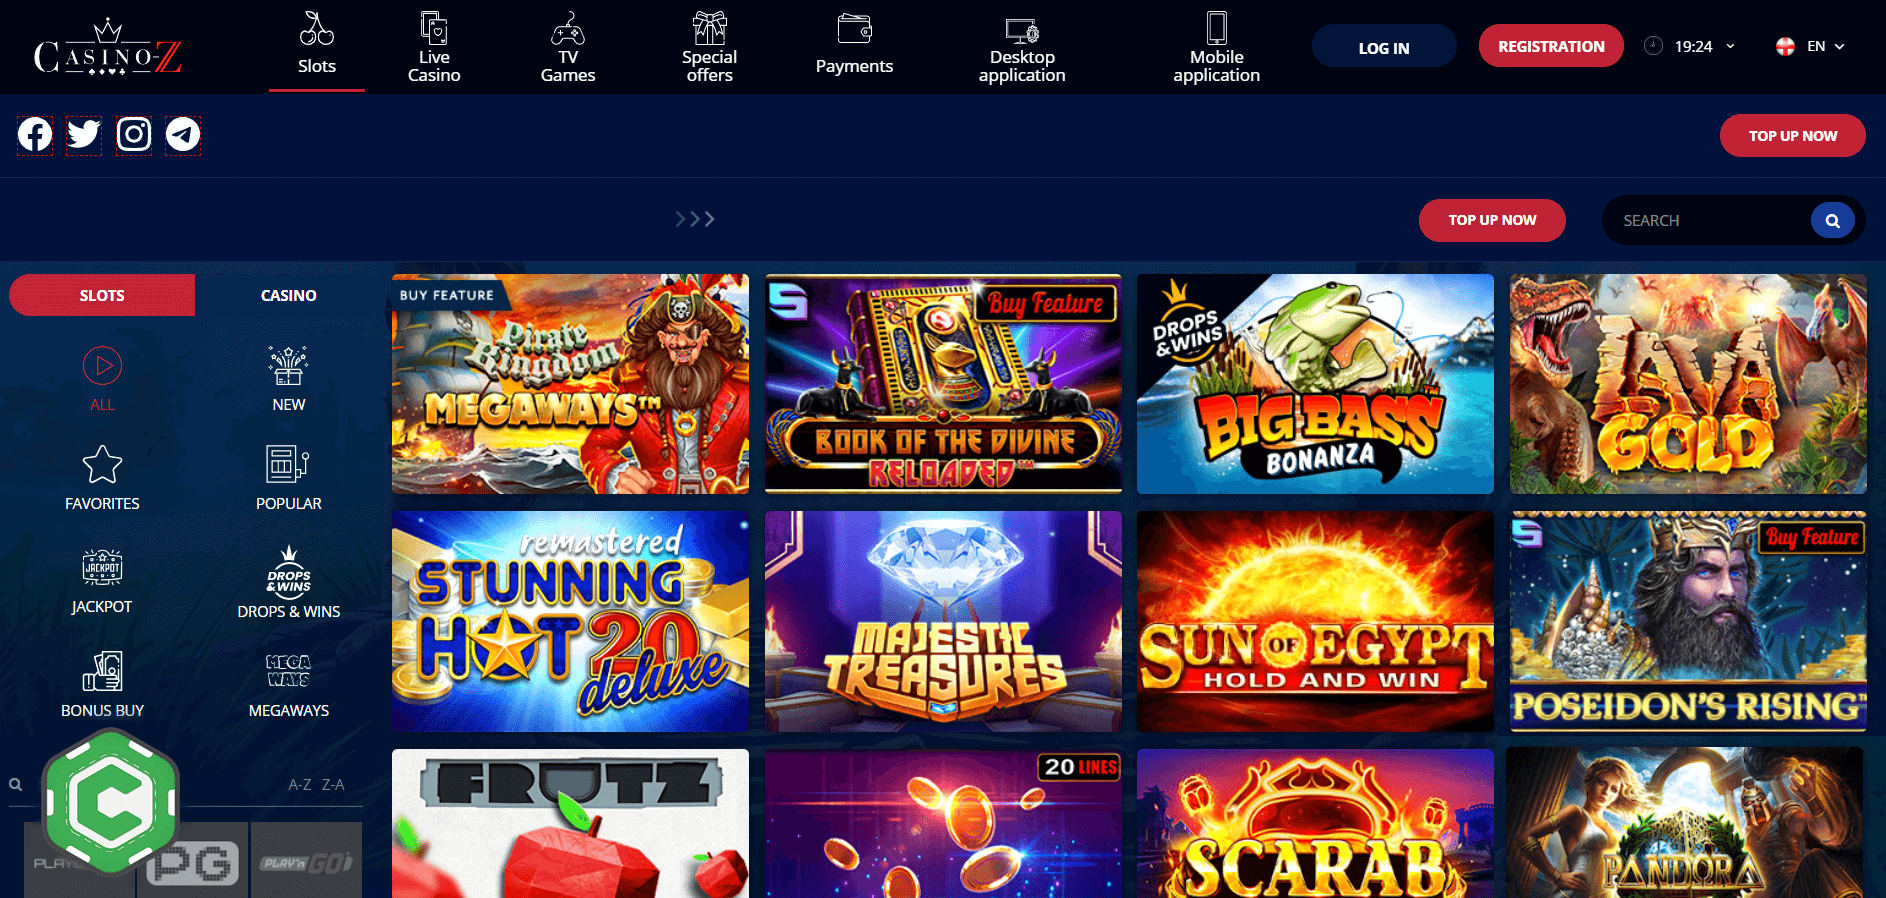 Casino Z Website Design